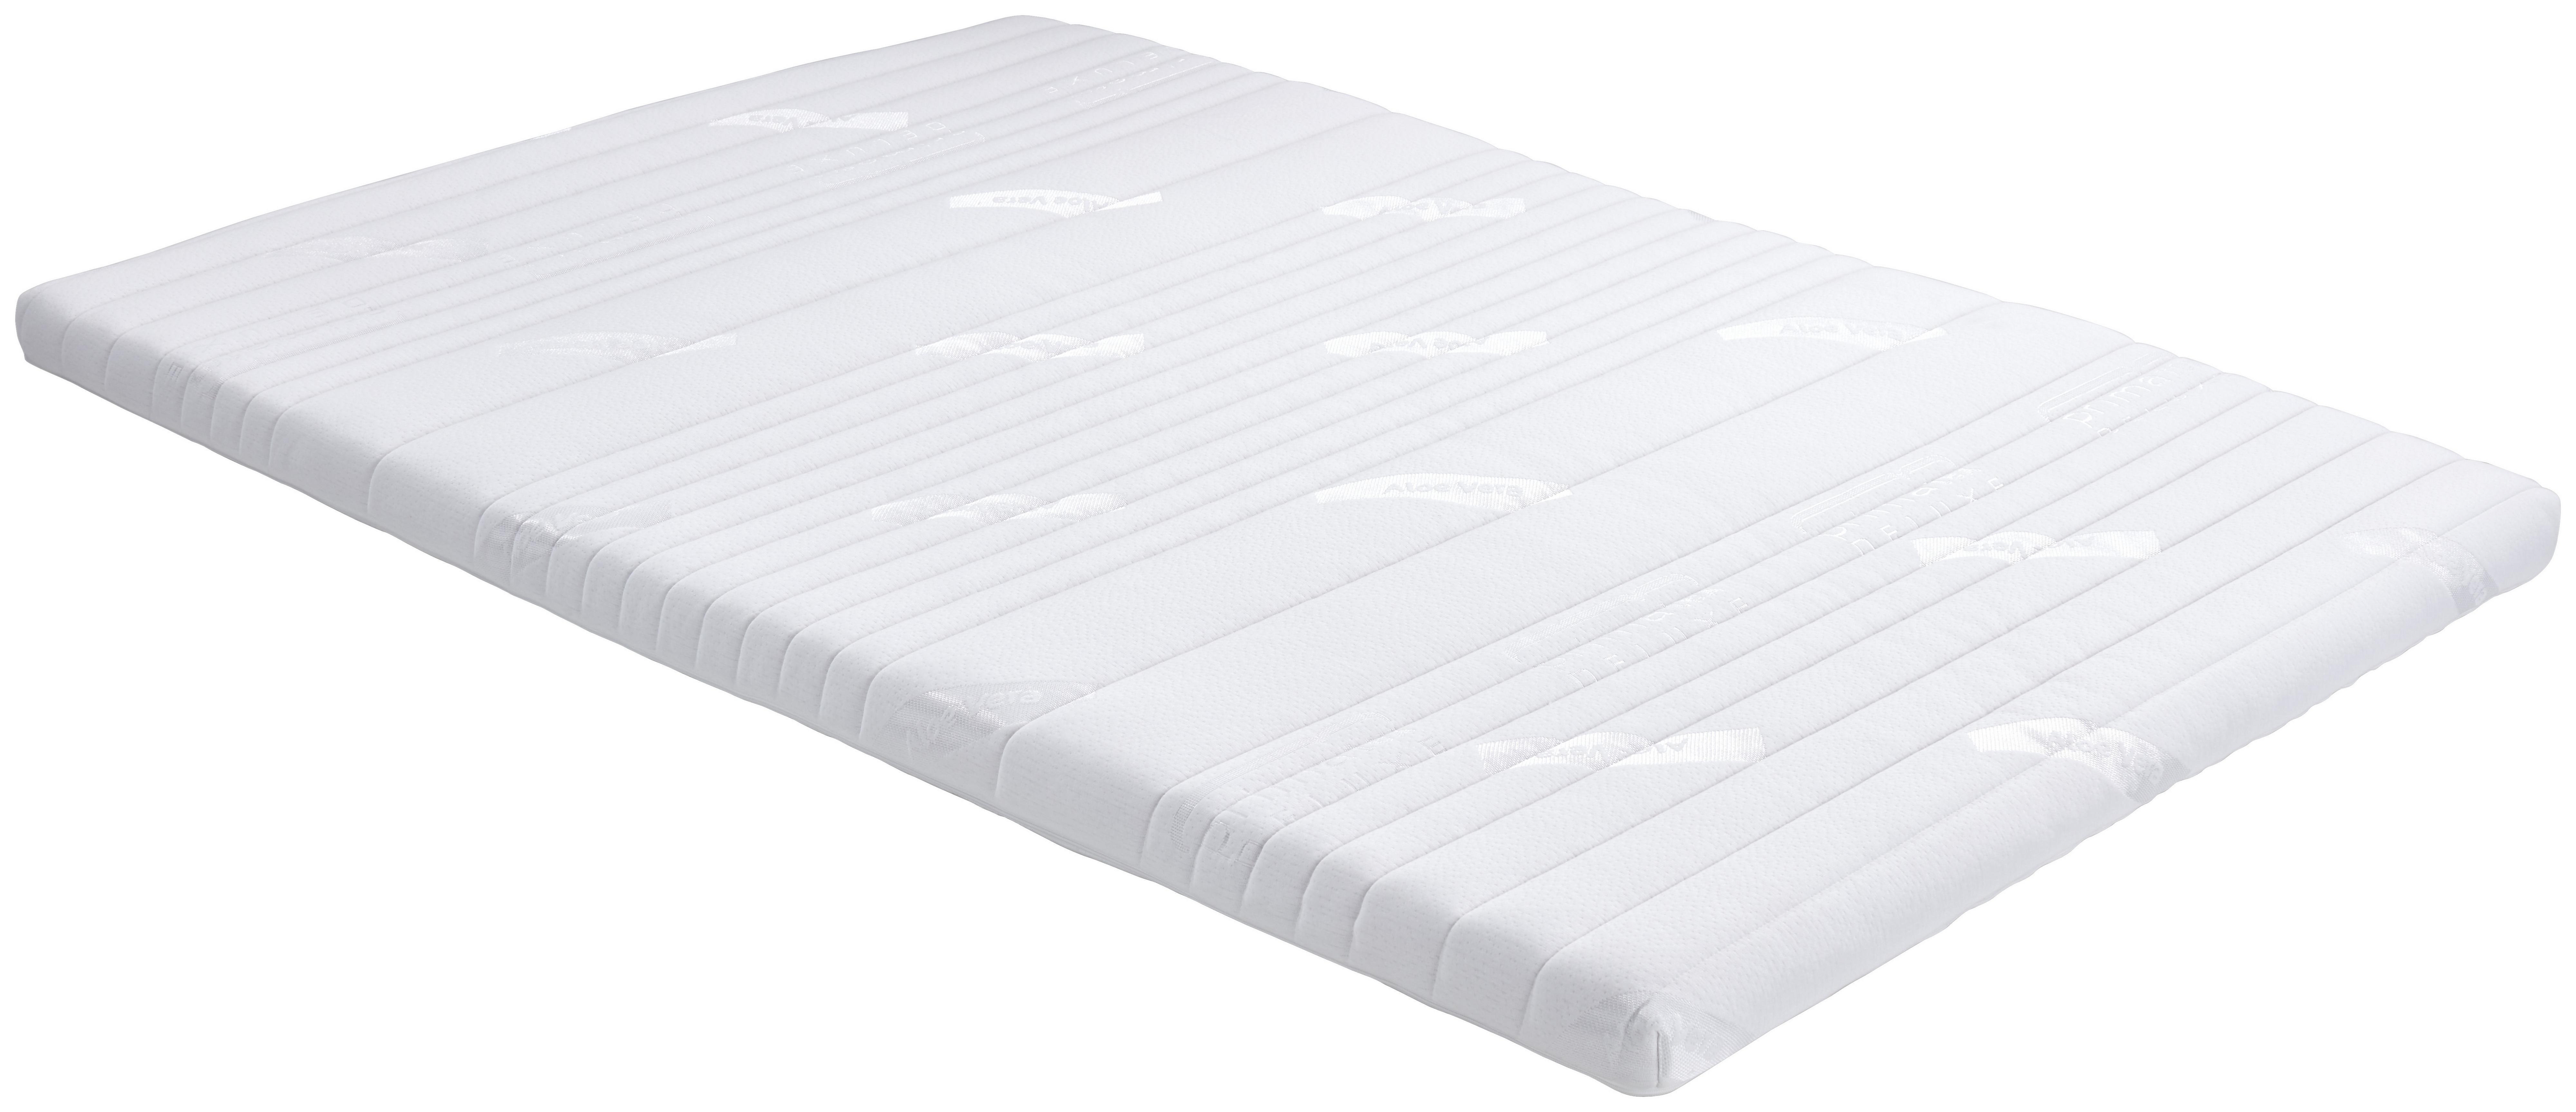 Topper "Relax" 160x200 cm - Weiß, Basics, Textil (160/200cm) - Primatex